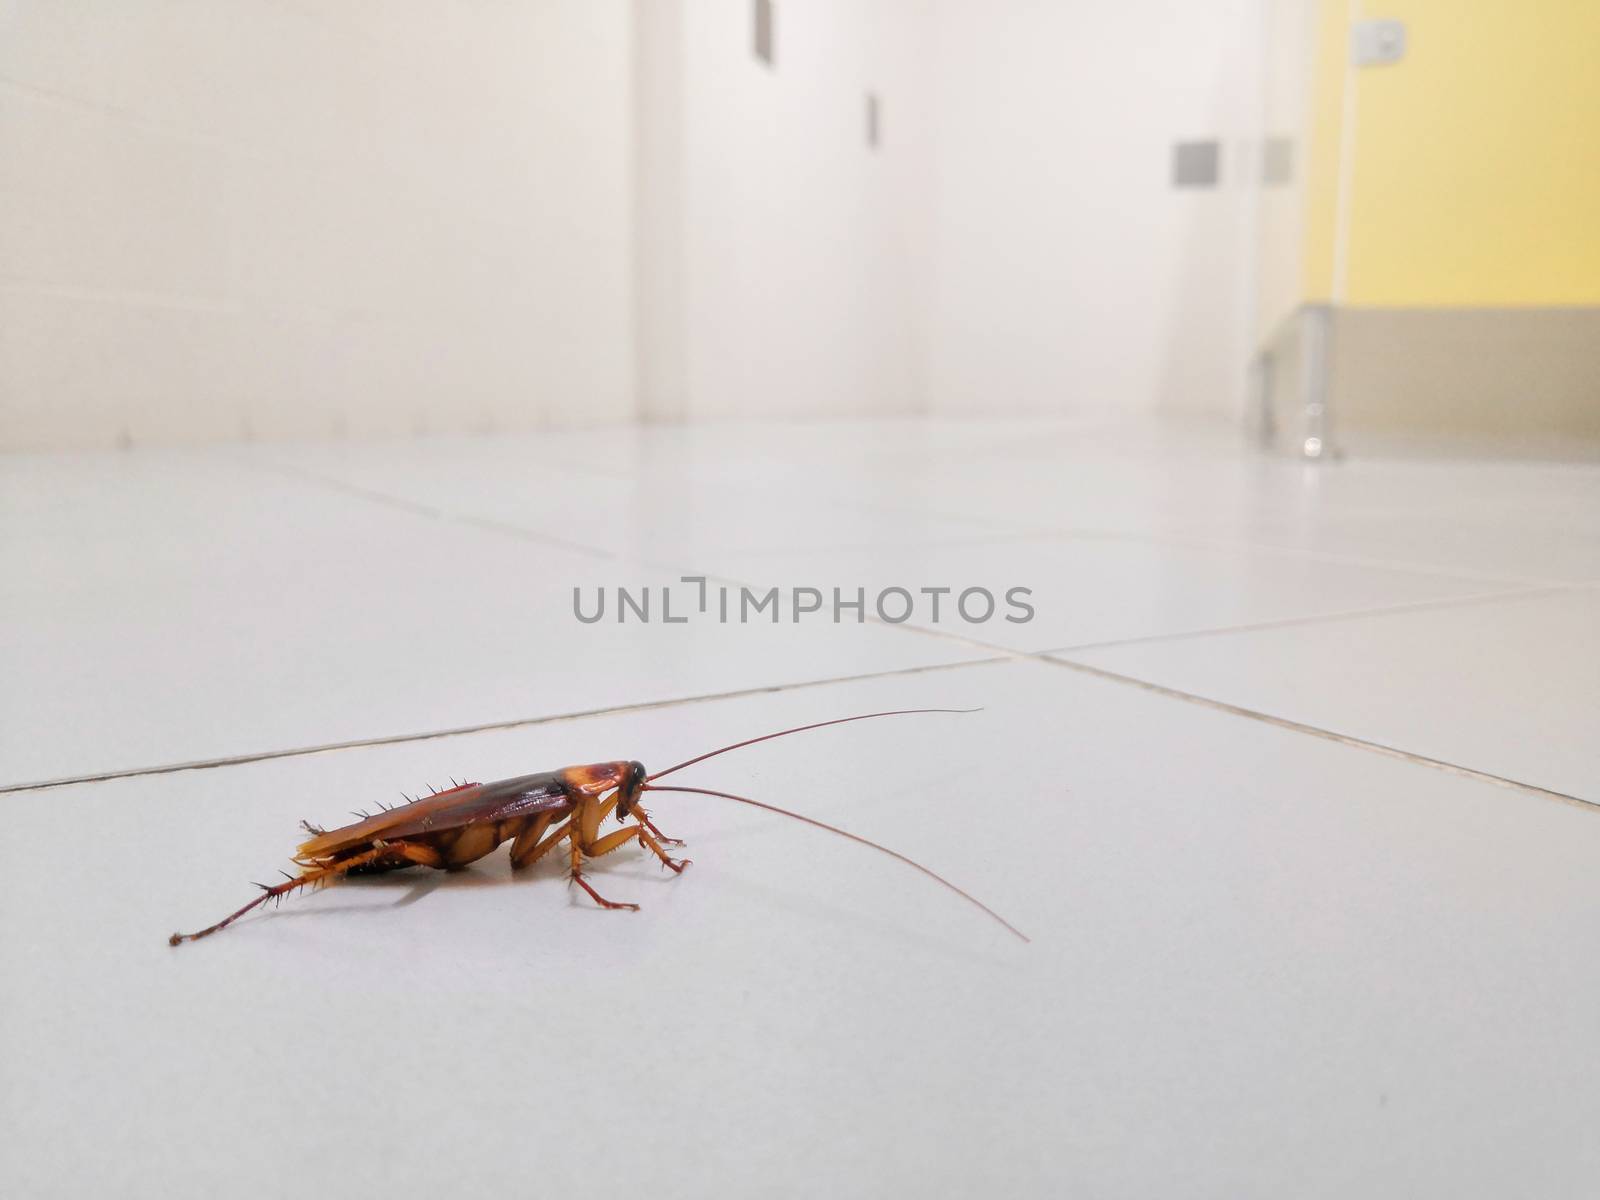 Cockroaches on the public toilet floor